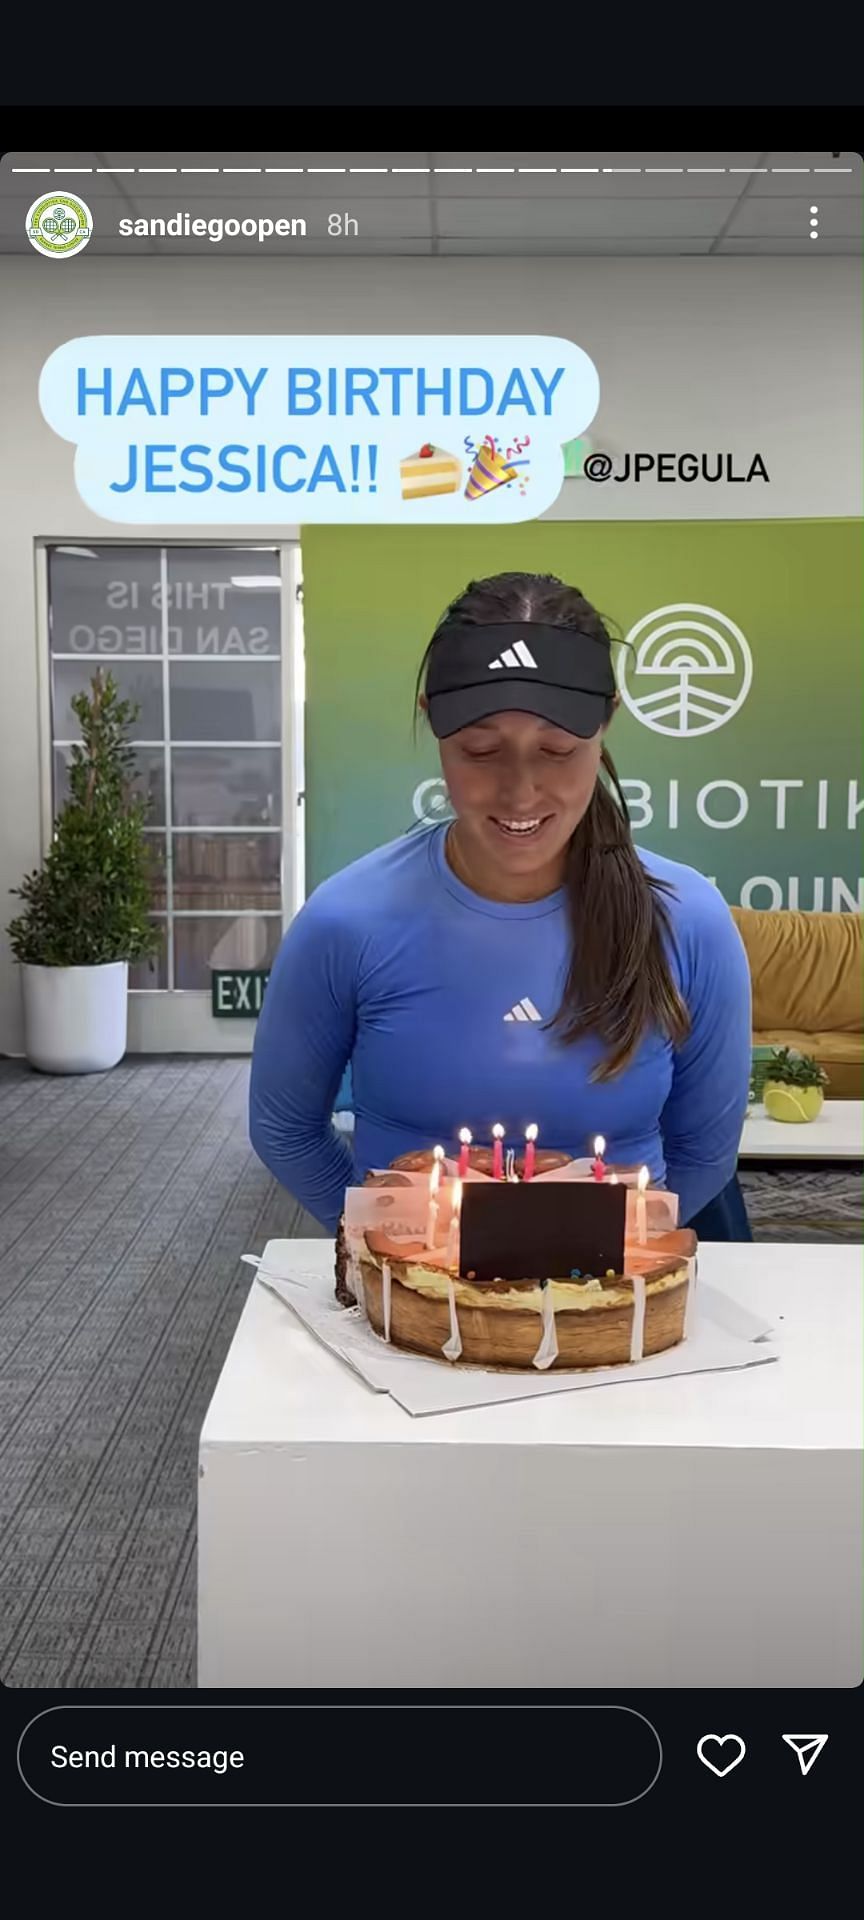 Jessica Pegula celebrates her birthday at the San Diego Open